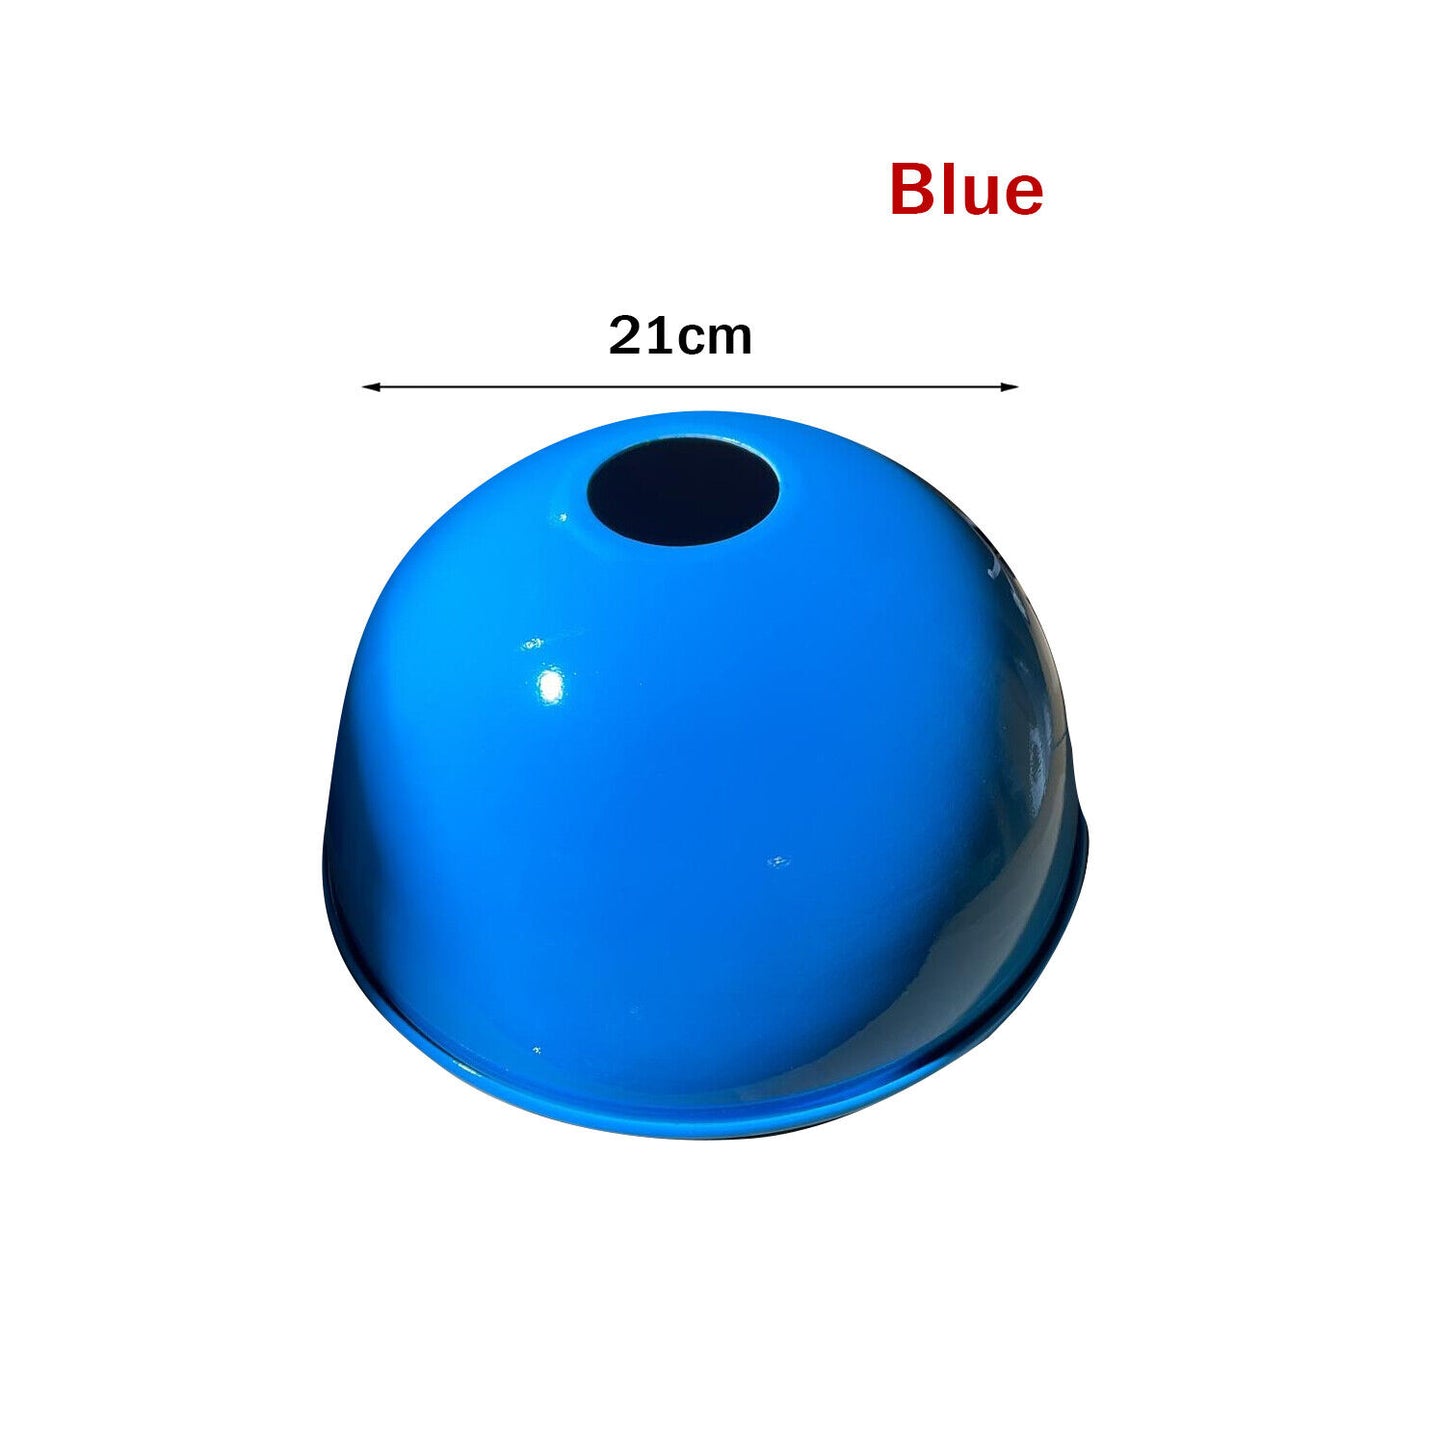 Blauer Lampenschirm dekorativer Lampenschirm aus Metall verschiedene Formen ~2574